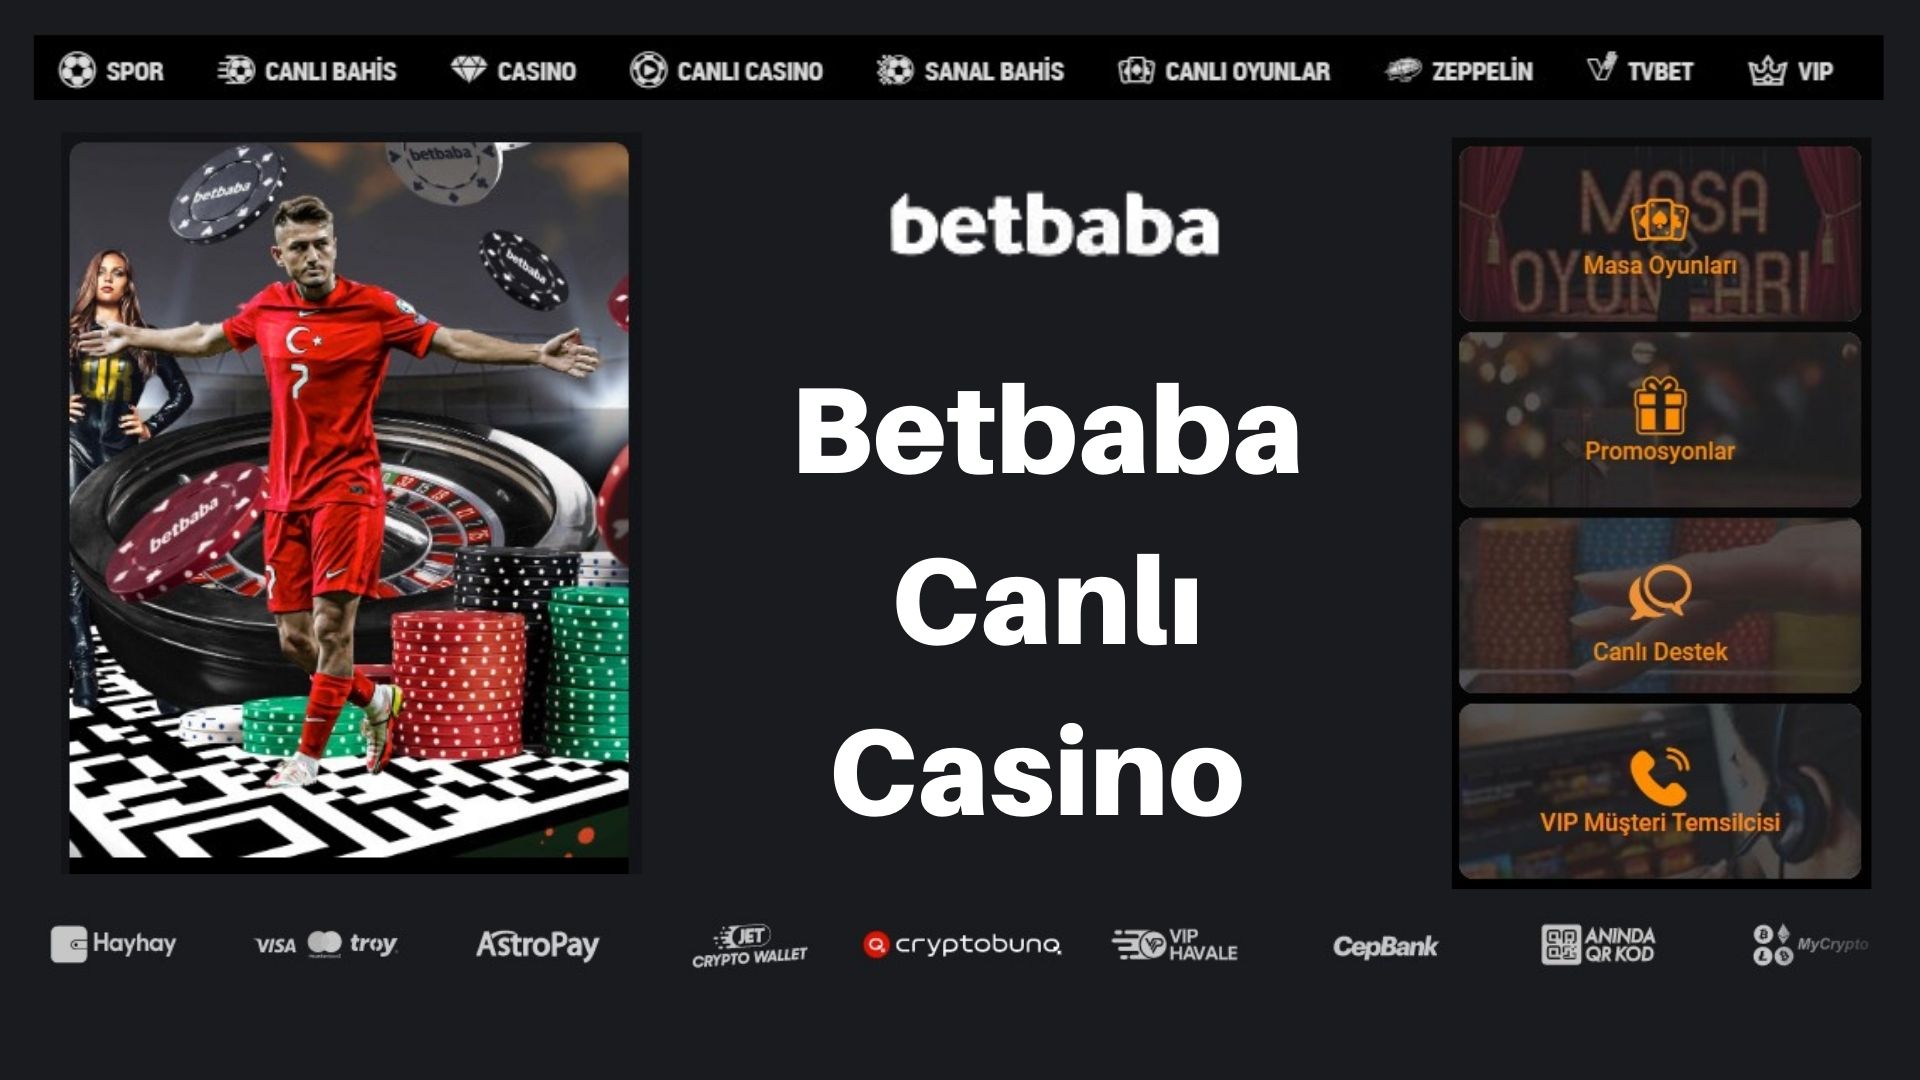 Betbaba Canlı Casino